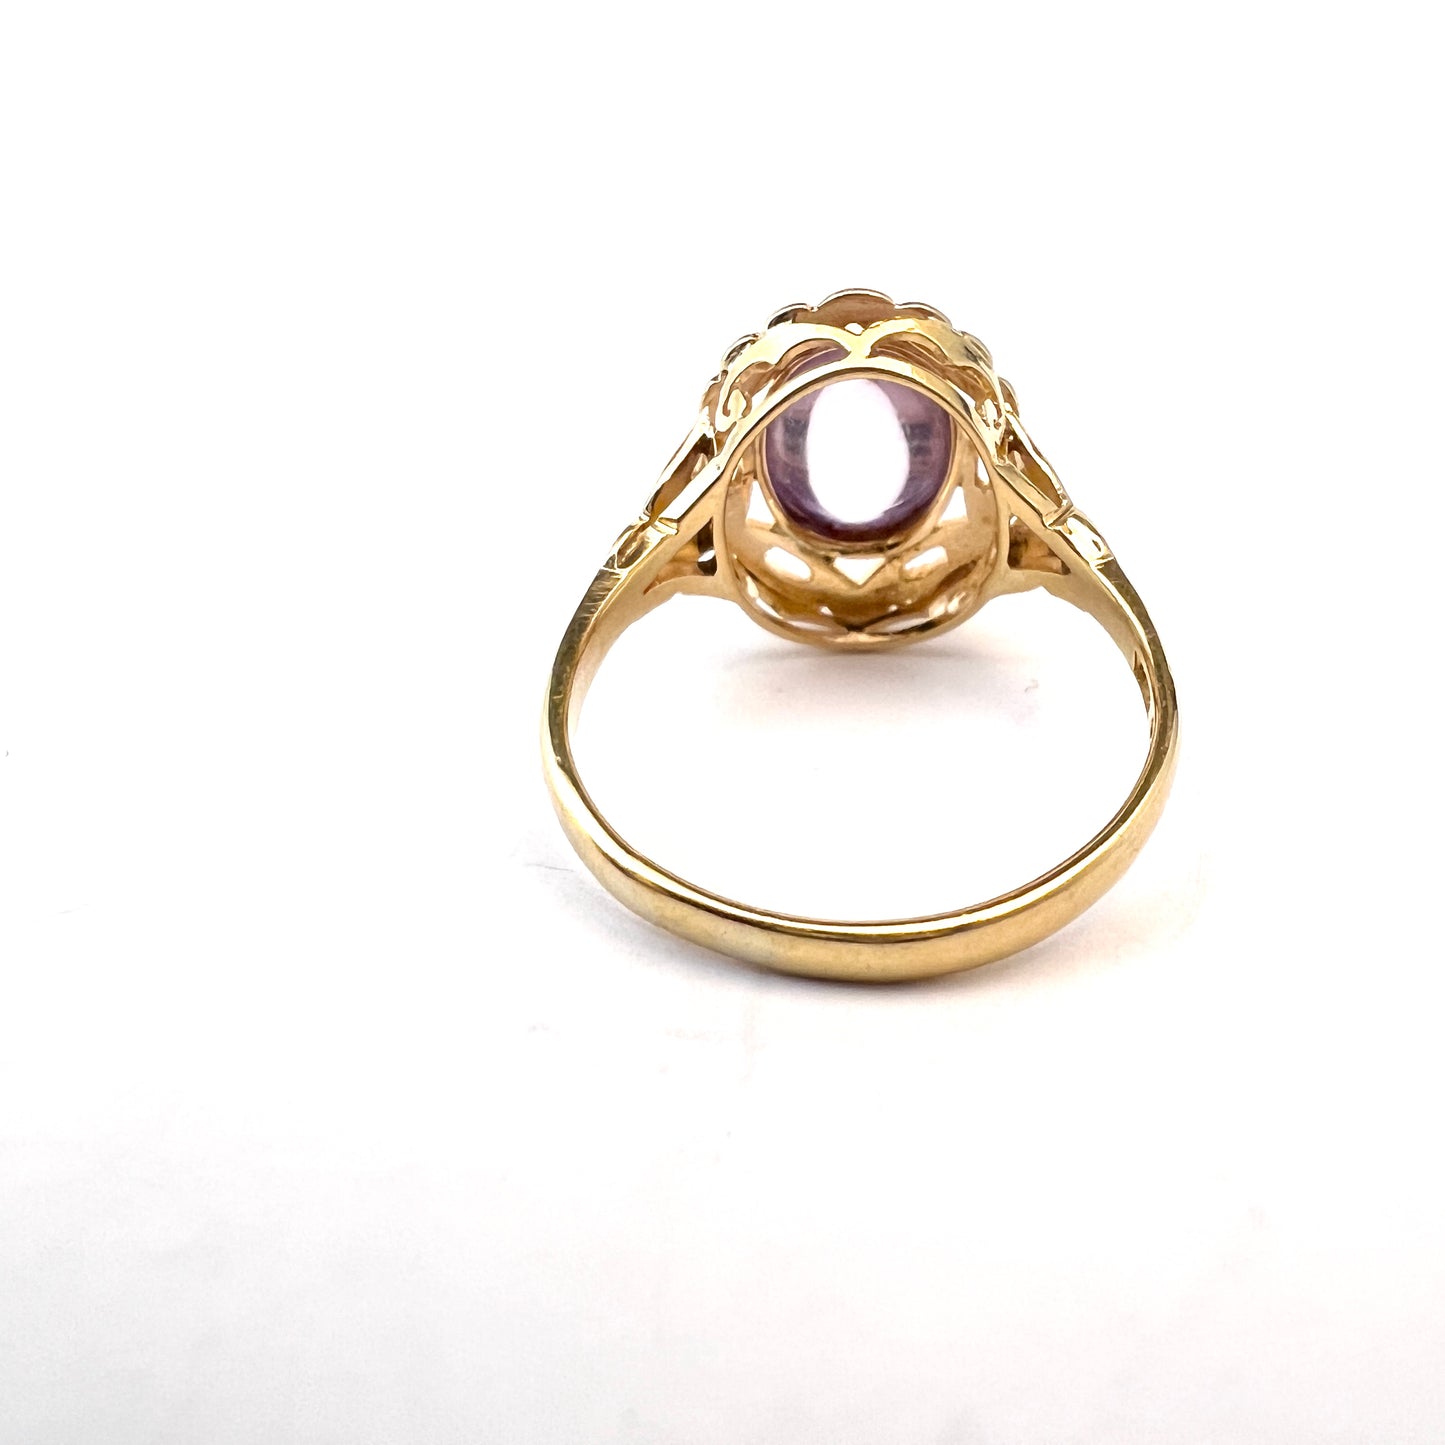 Ahlberg & Berghman, Sweden 1951. Vintage 18k Gold Pale Amethyst Ring.